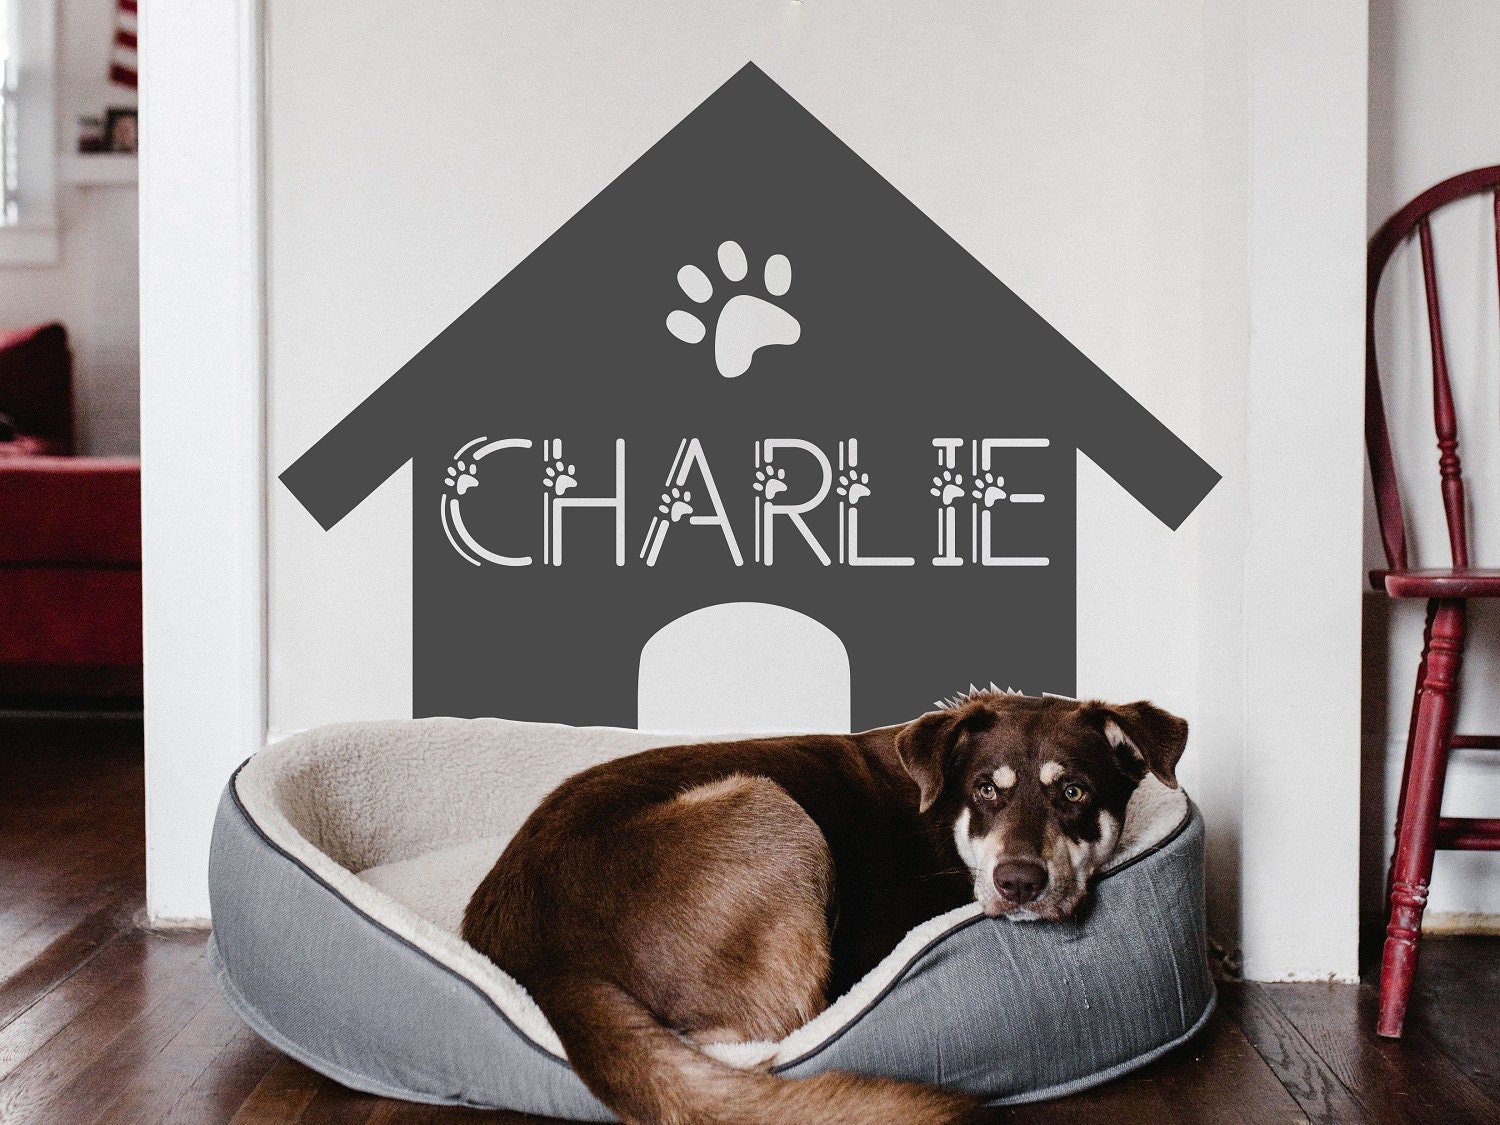  Personalized Name Shiba Dog Wall Decals, Mandala of Dog Vinyl  Waterproof Sticker, 16x12inch : Tools & Home Improvement